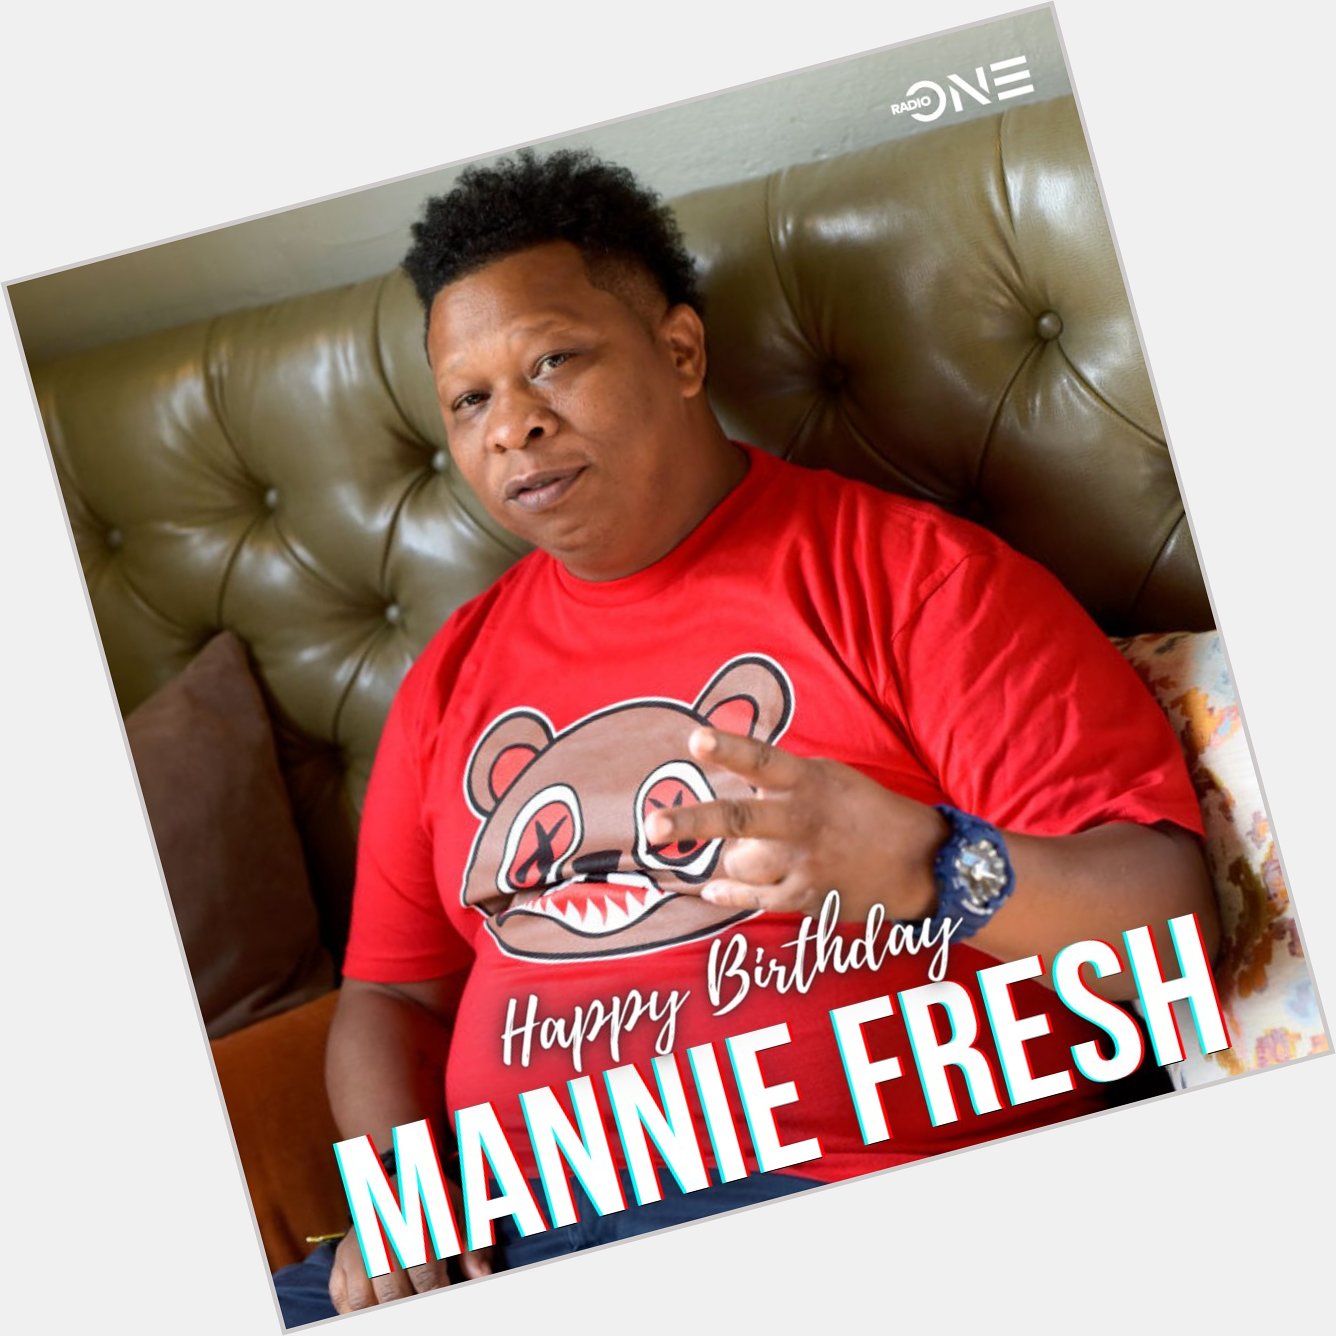 Happy birthday to the legendary Mannie Fresh!  